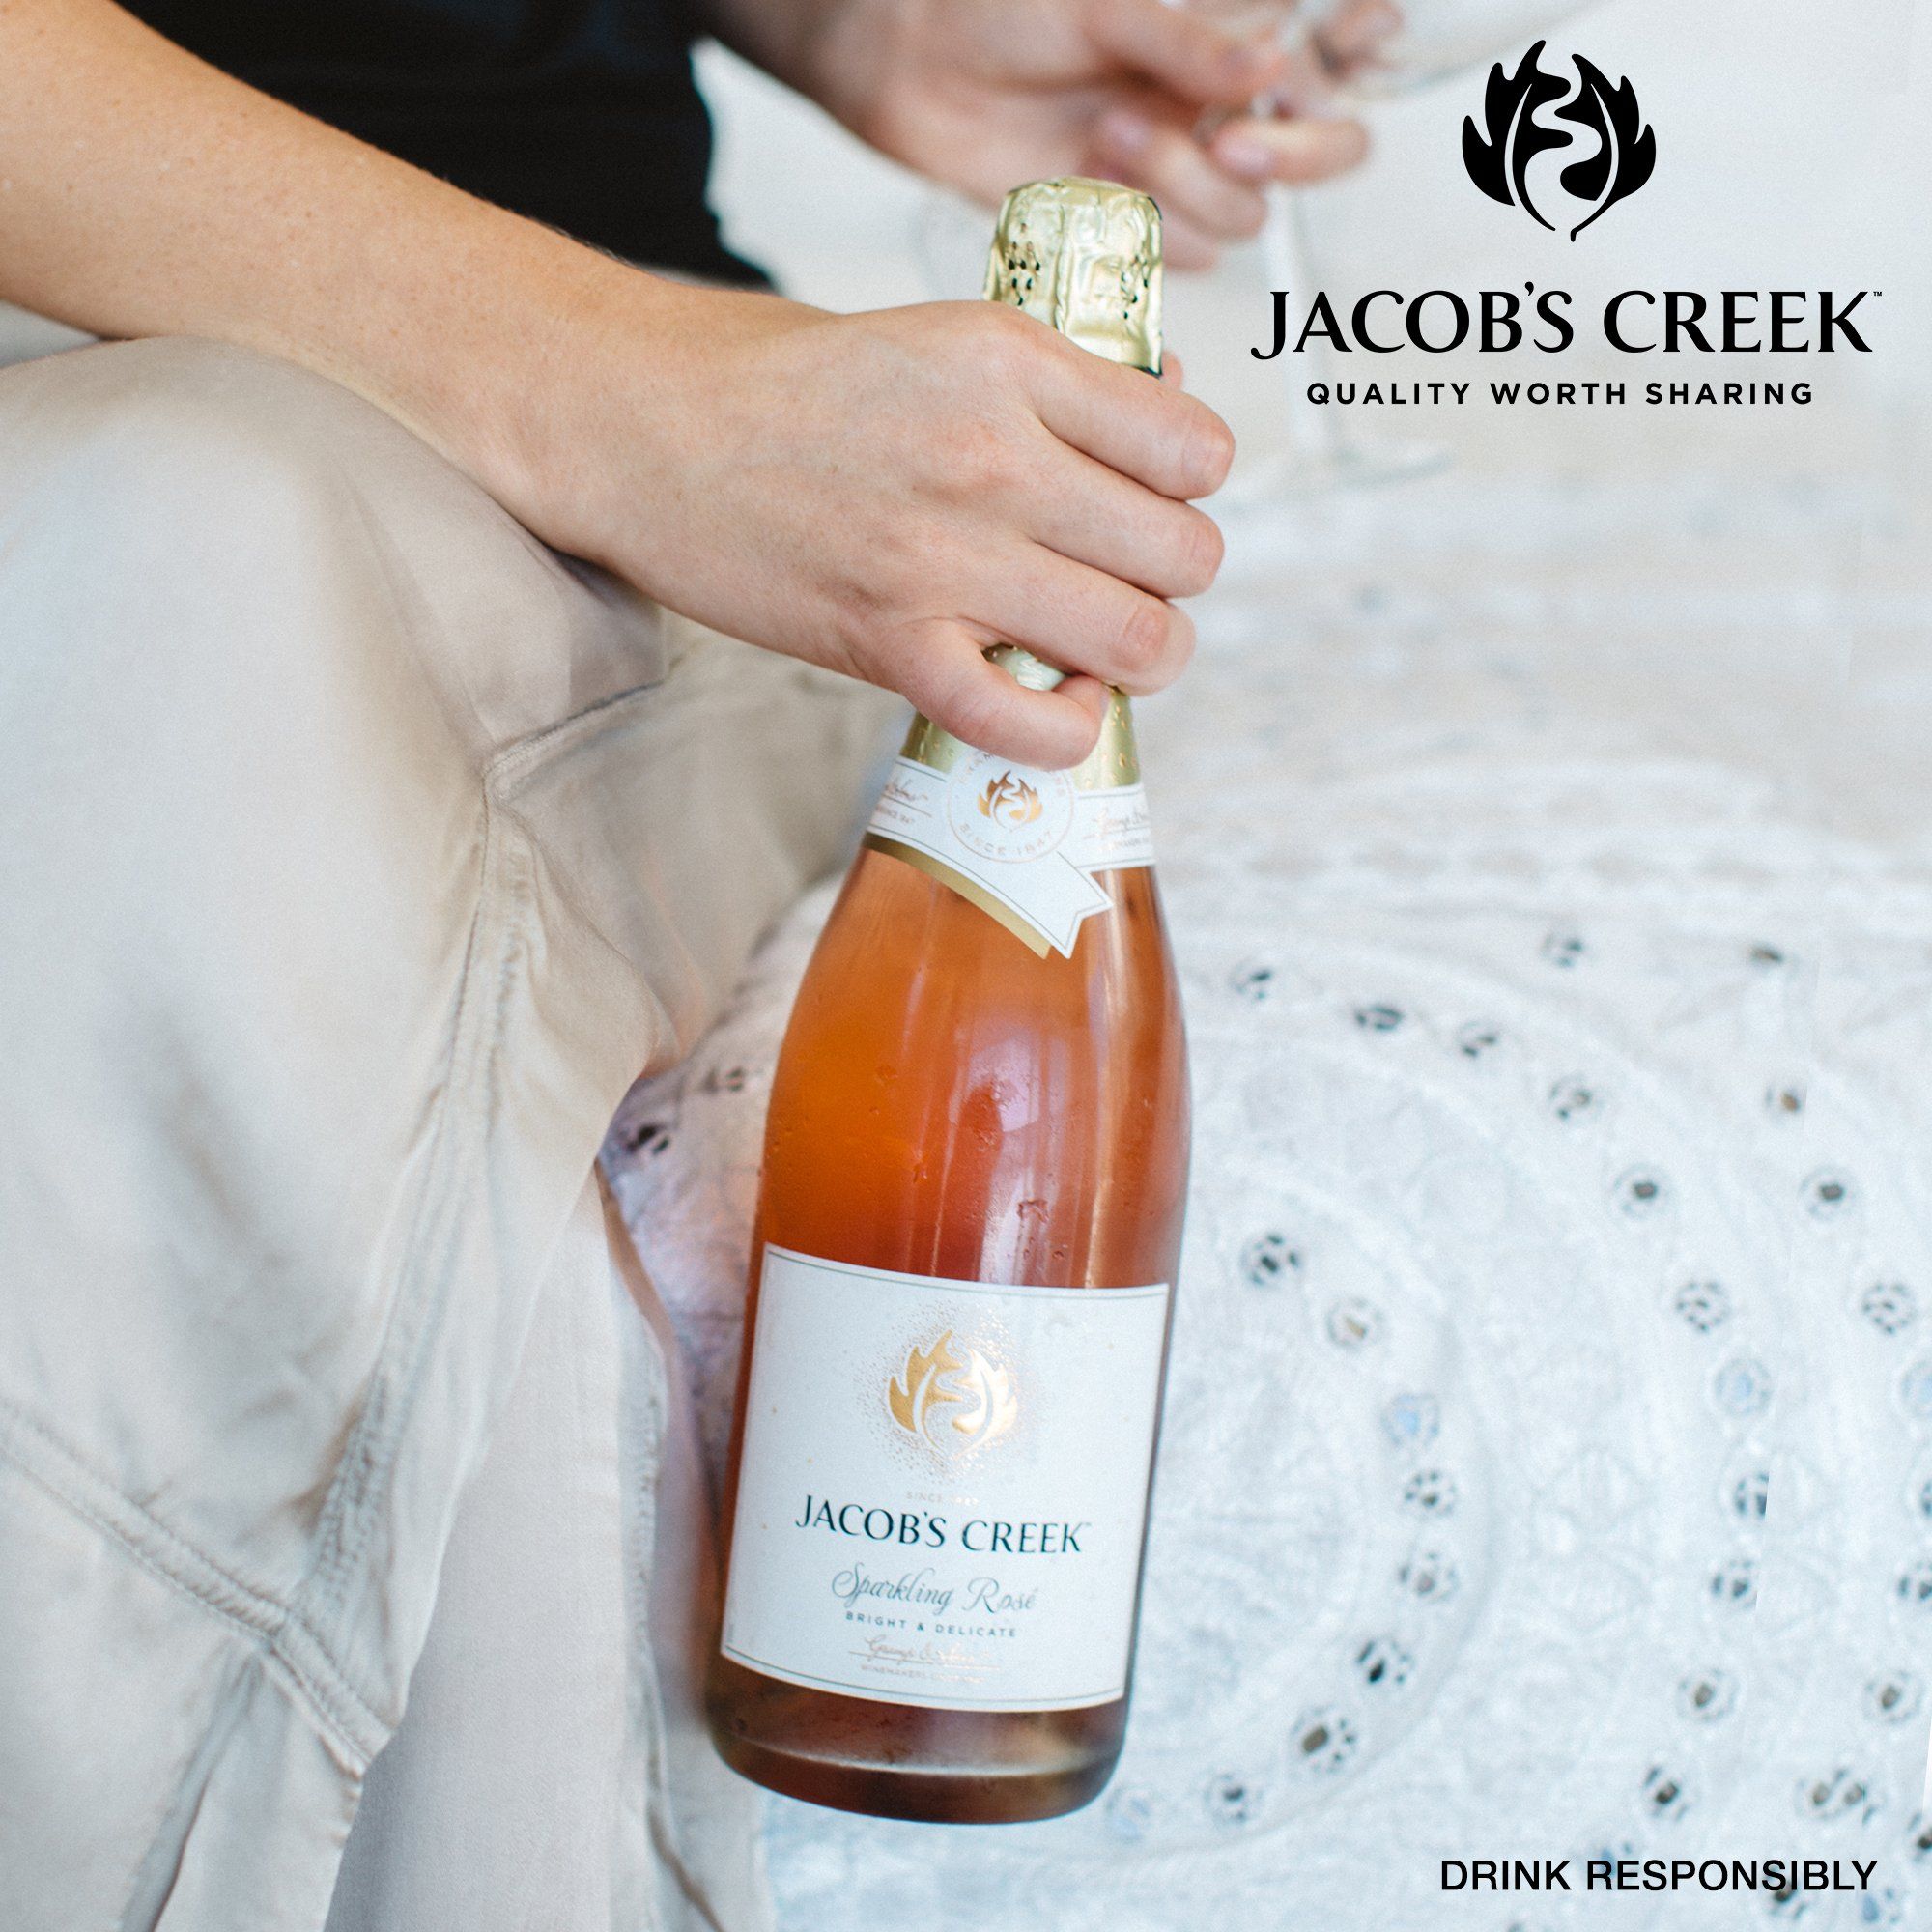 Jacob's Creek Sparkling Rosé 750ml at ₱949.00